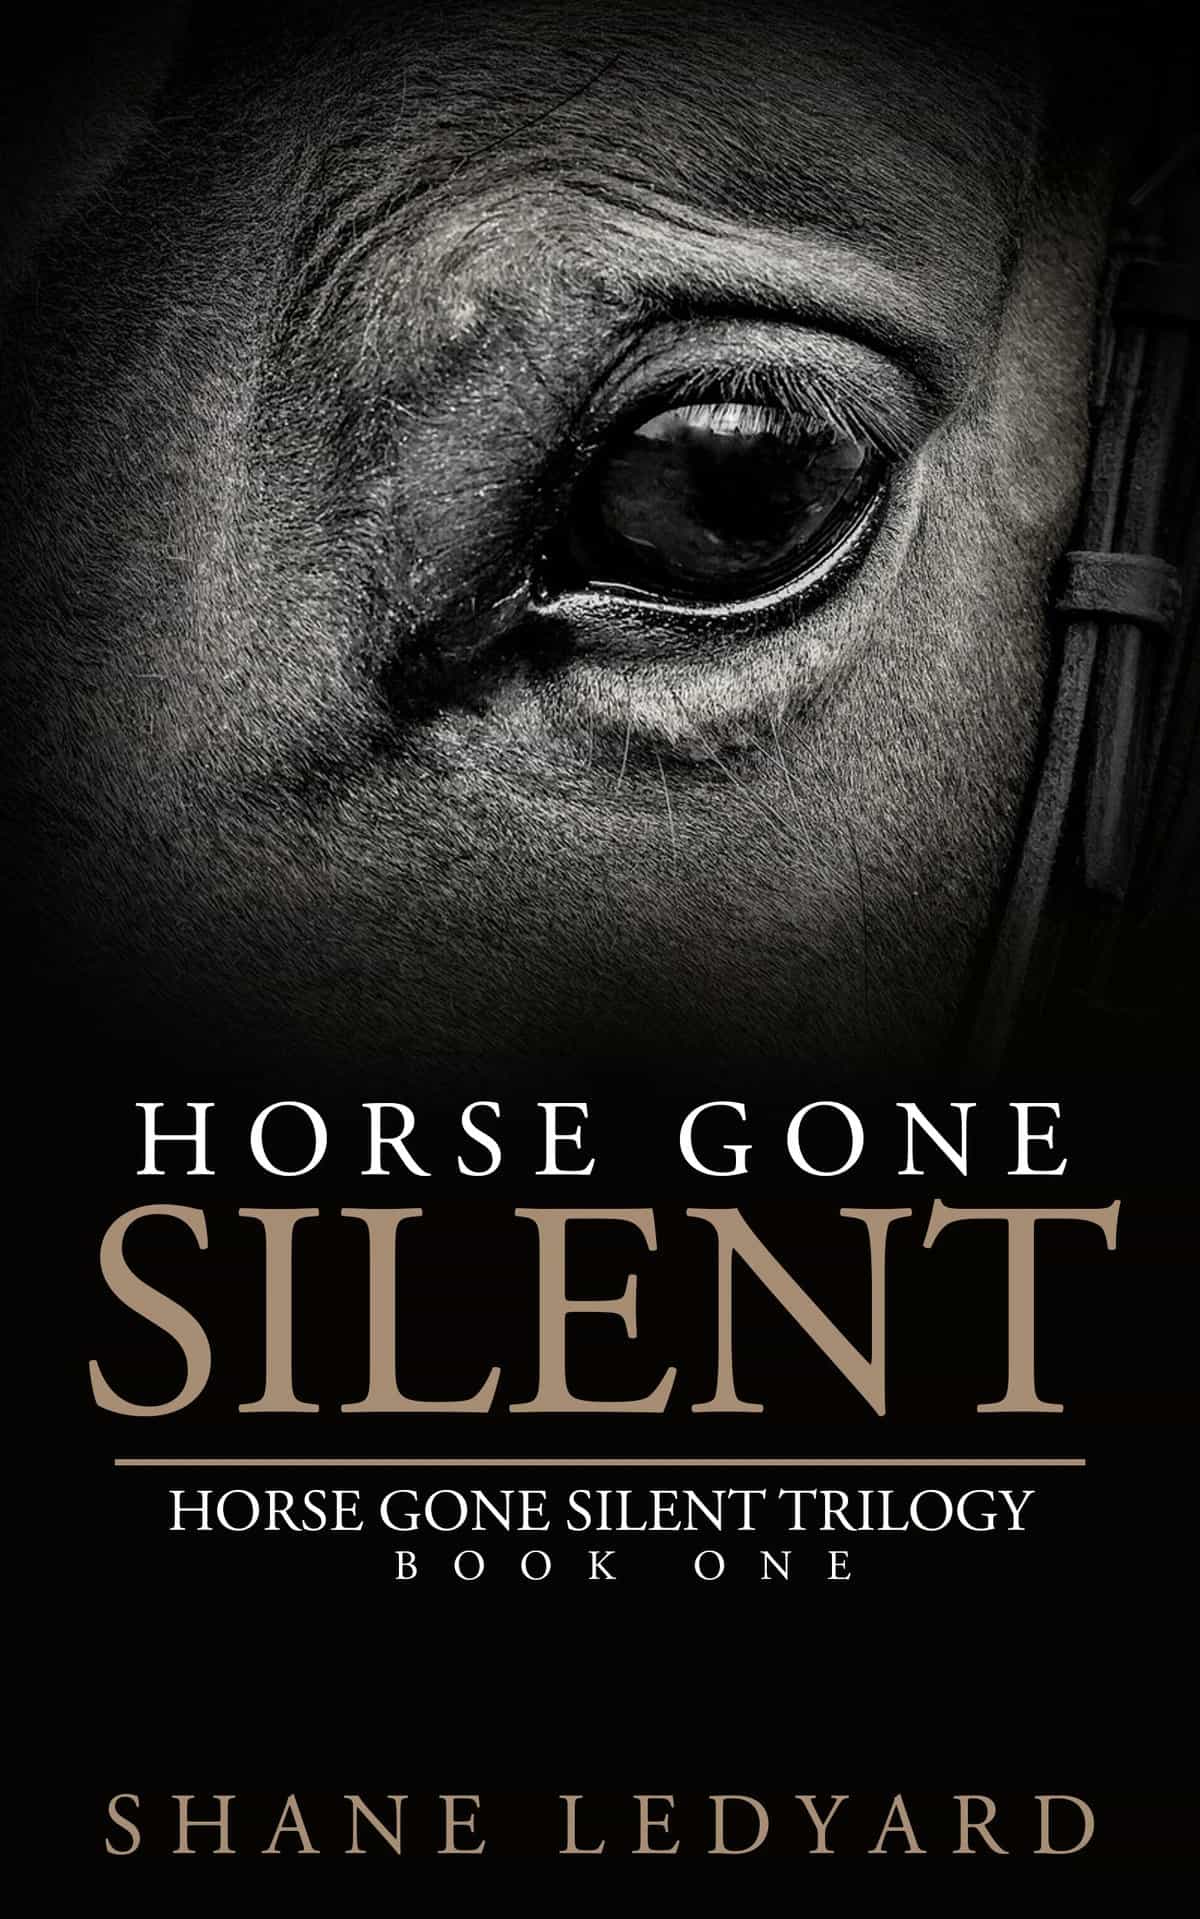 Horse Gone Silent by Shane Ledyard